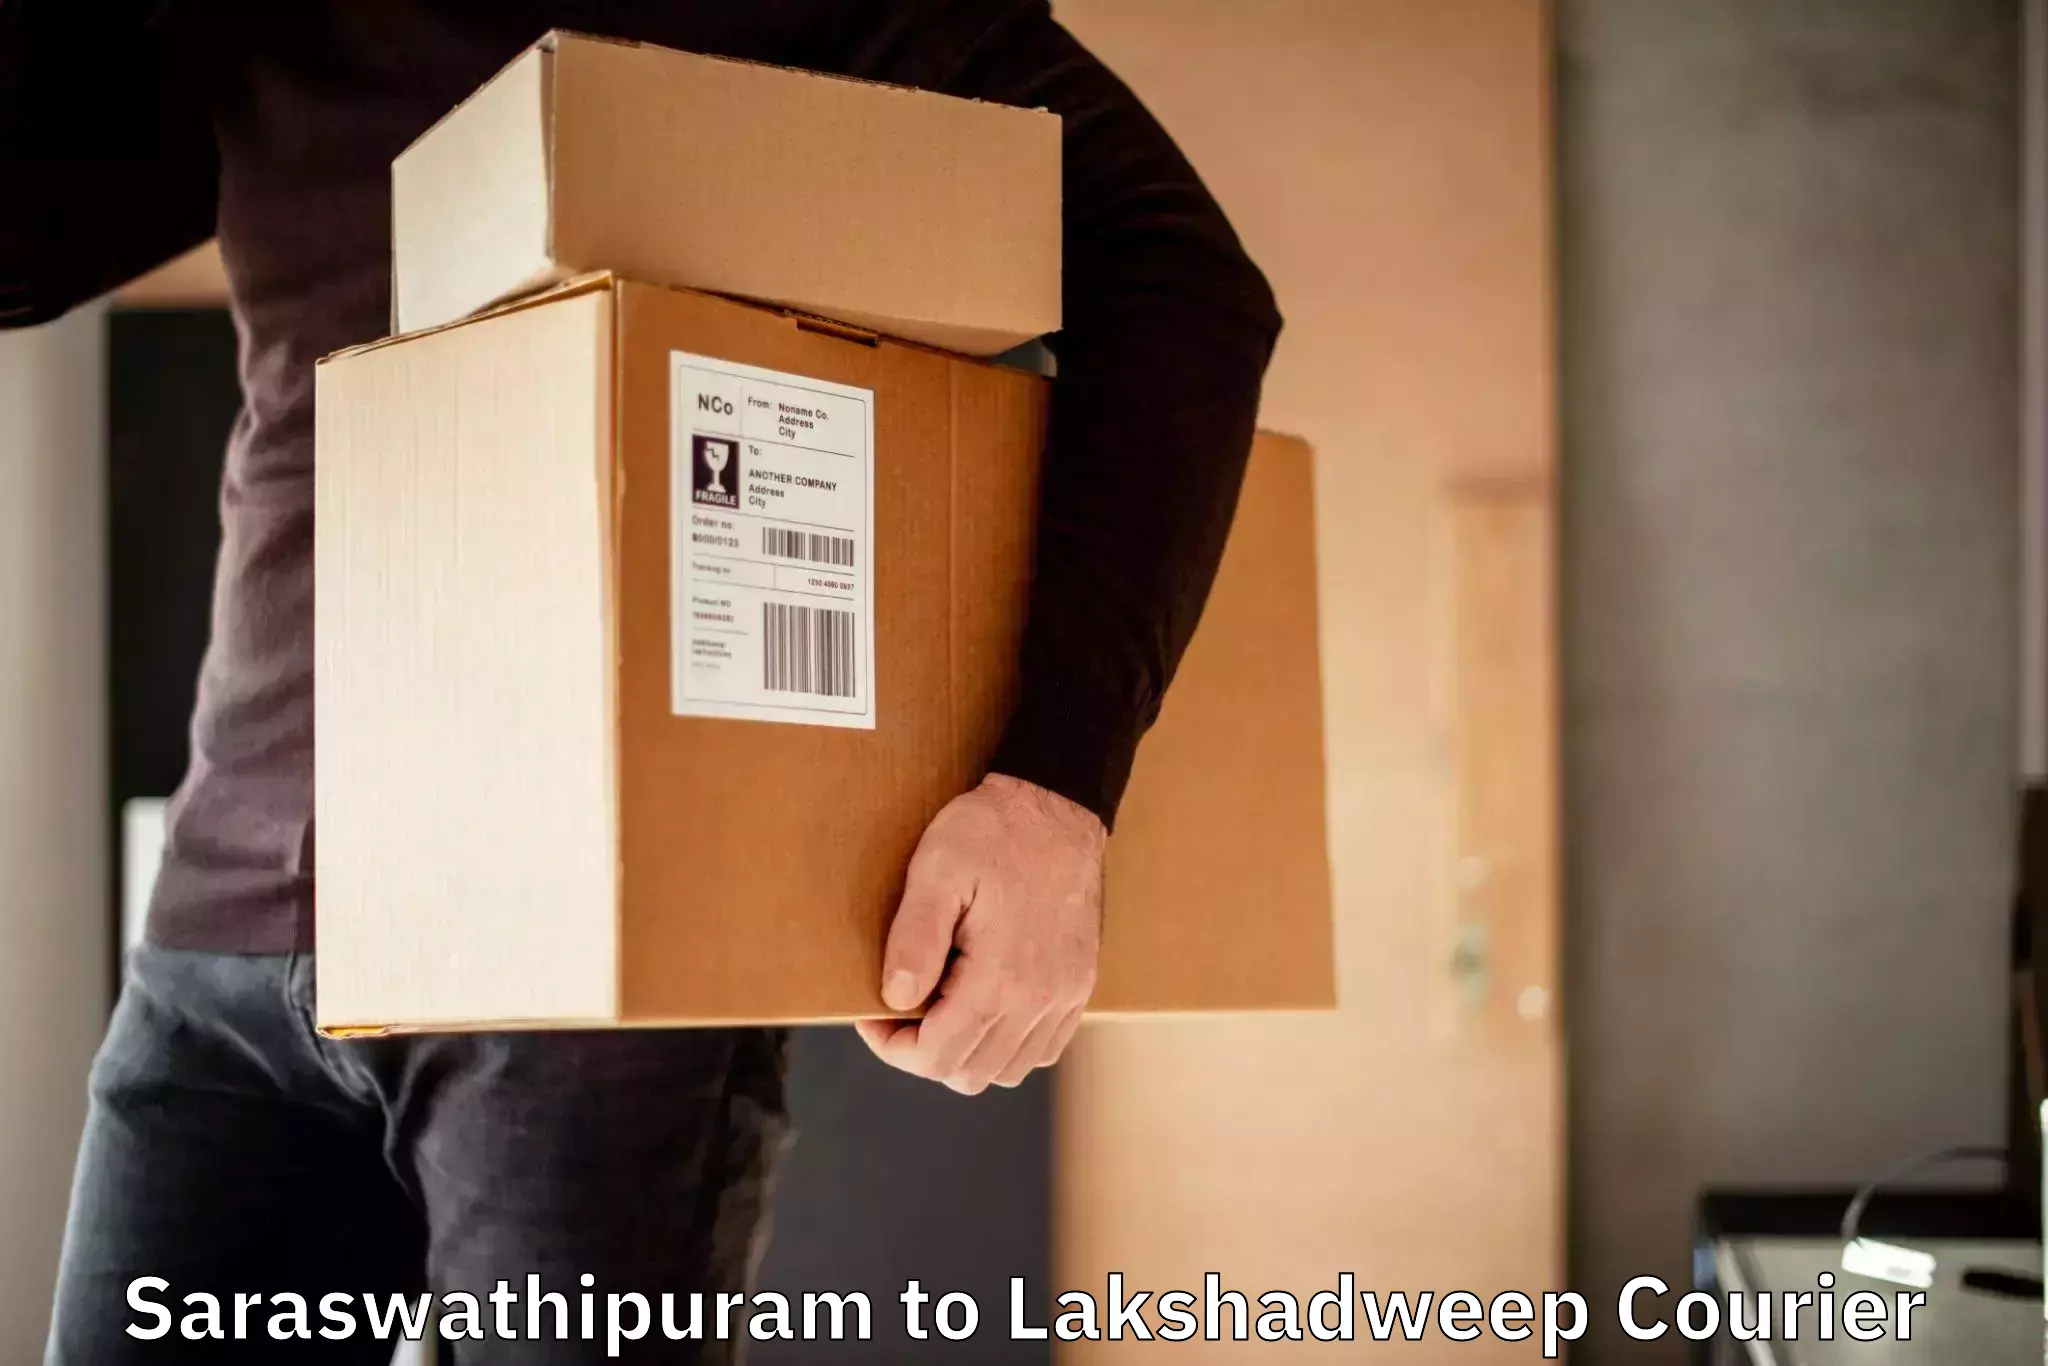 International parcel service Saraswathipuram to Lakshadweep